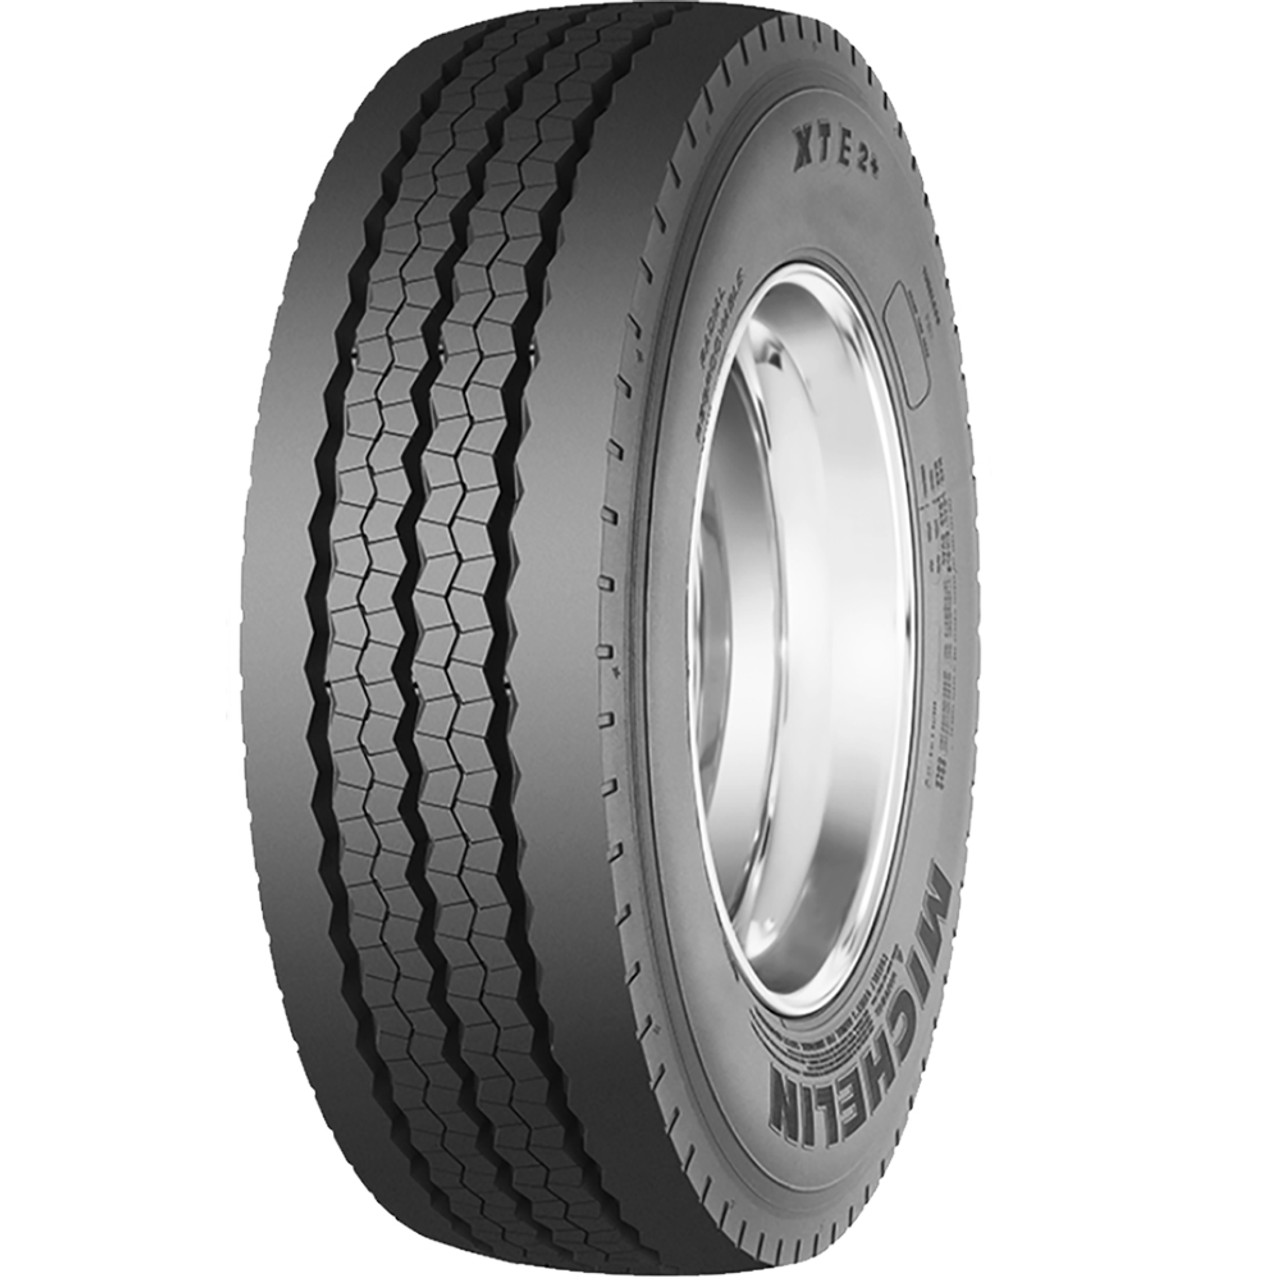 Michelin XTE2+ 245/70R17.5 143/141J J (18 Ply) AS A/S All Season Tire